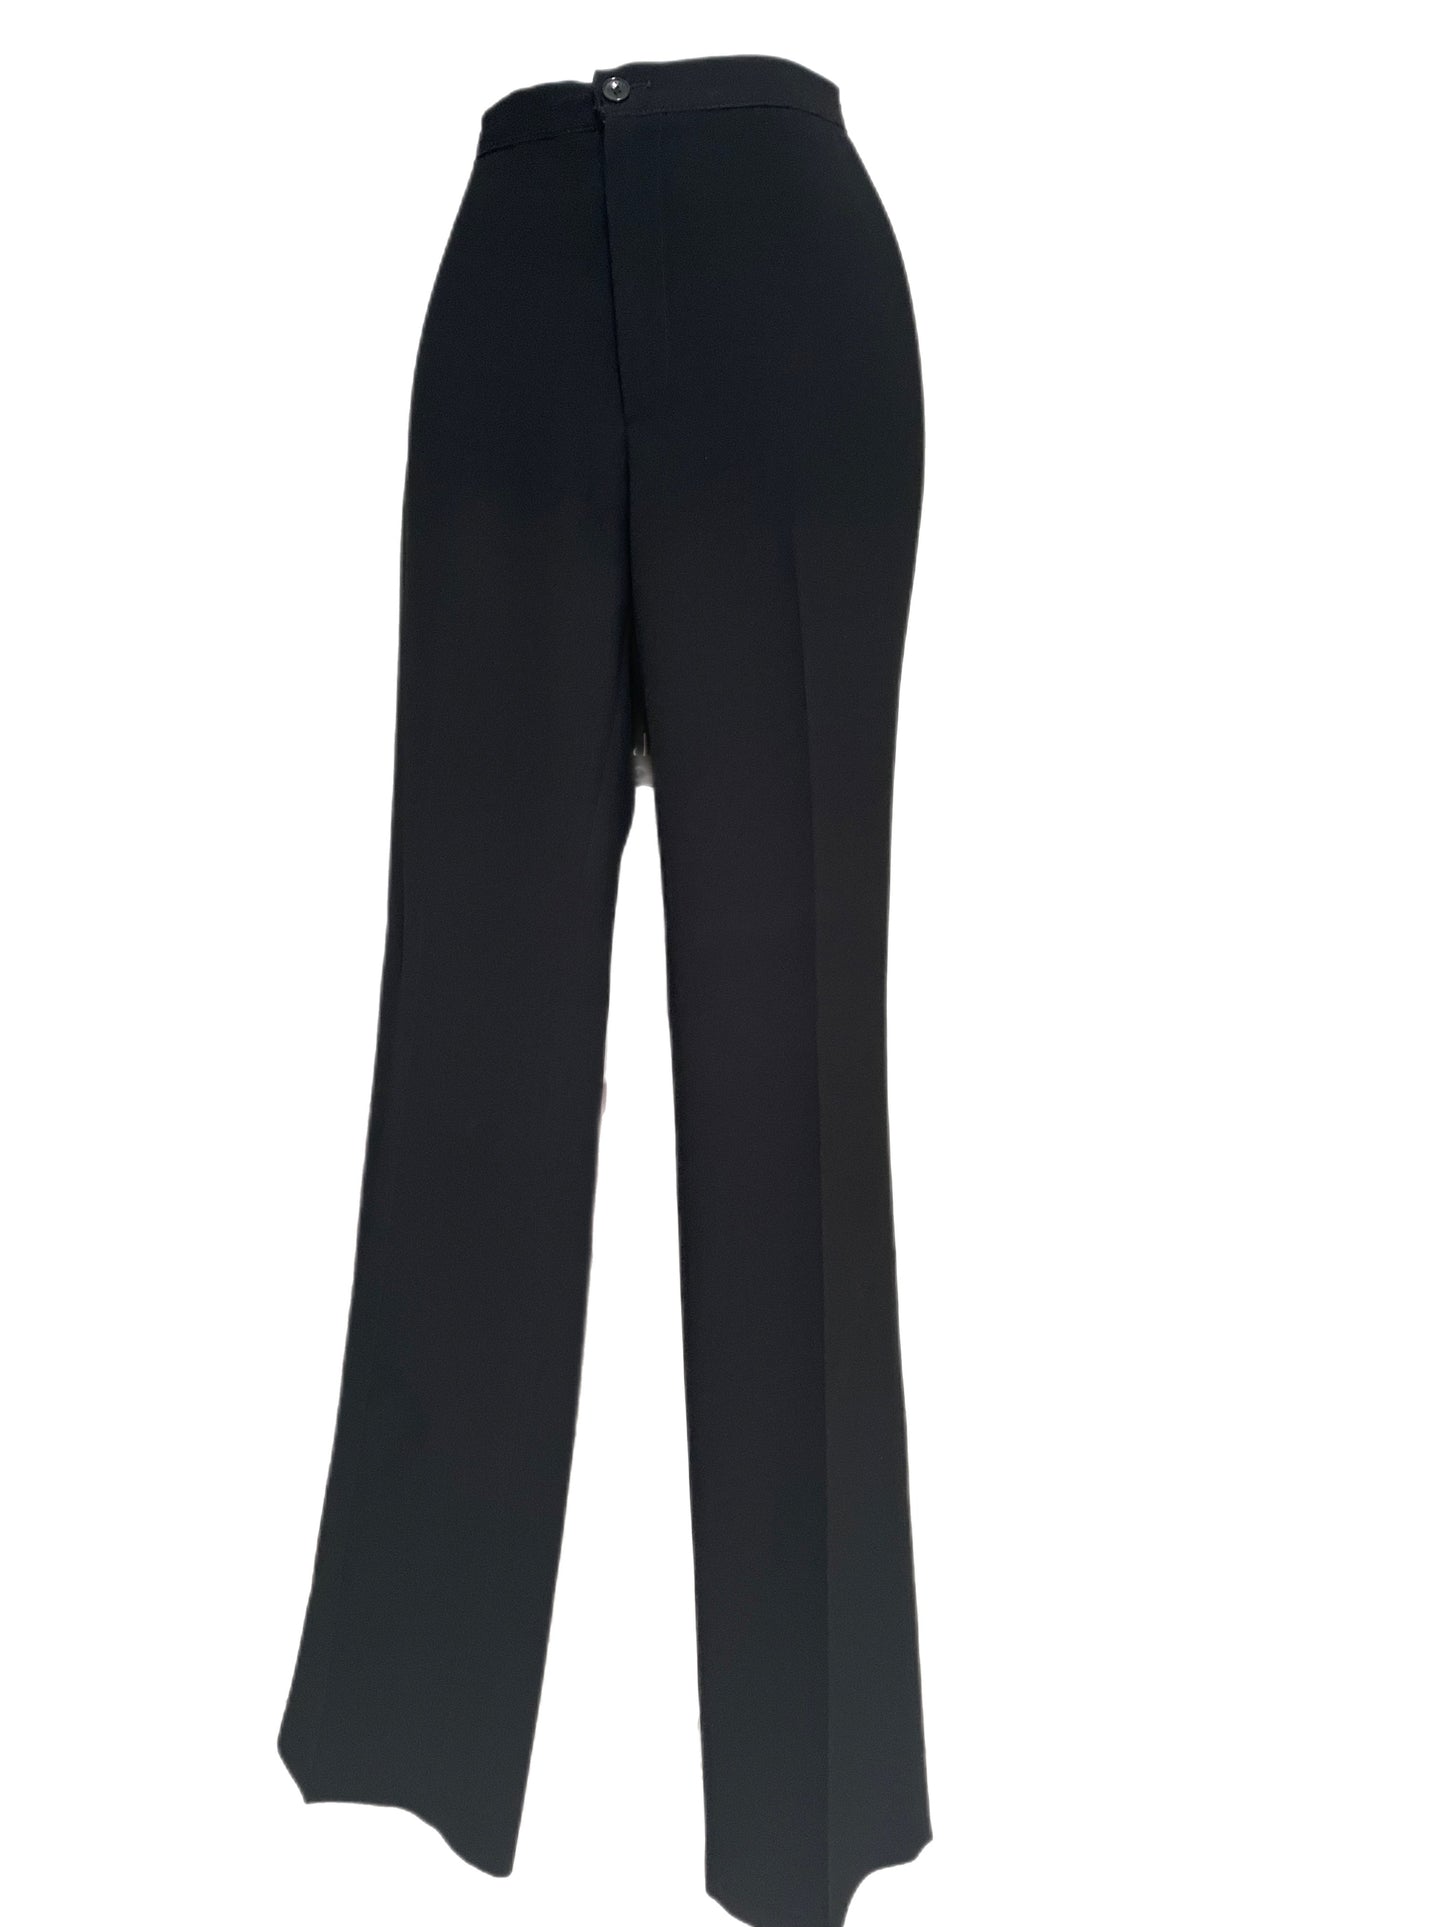 Pants-Creased Slack Design- Black Colored By Vertigo